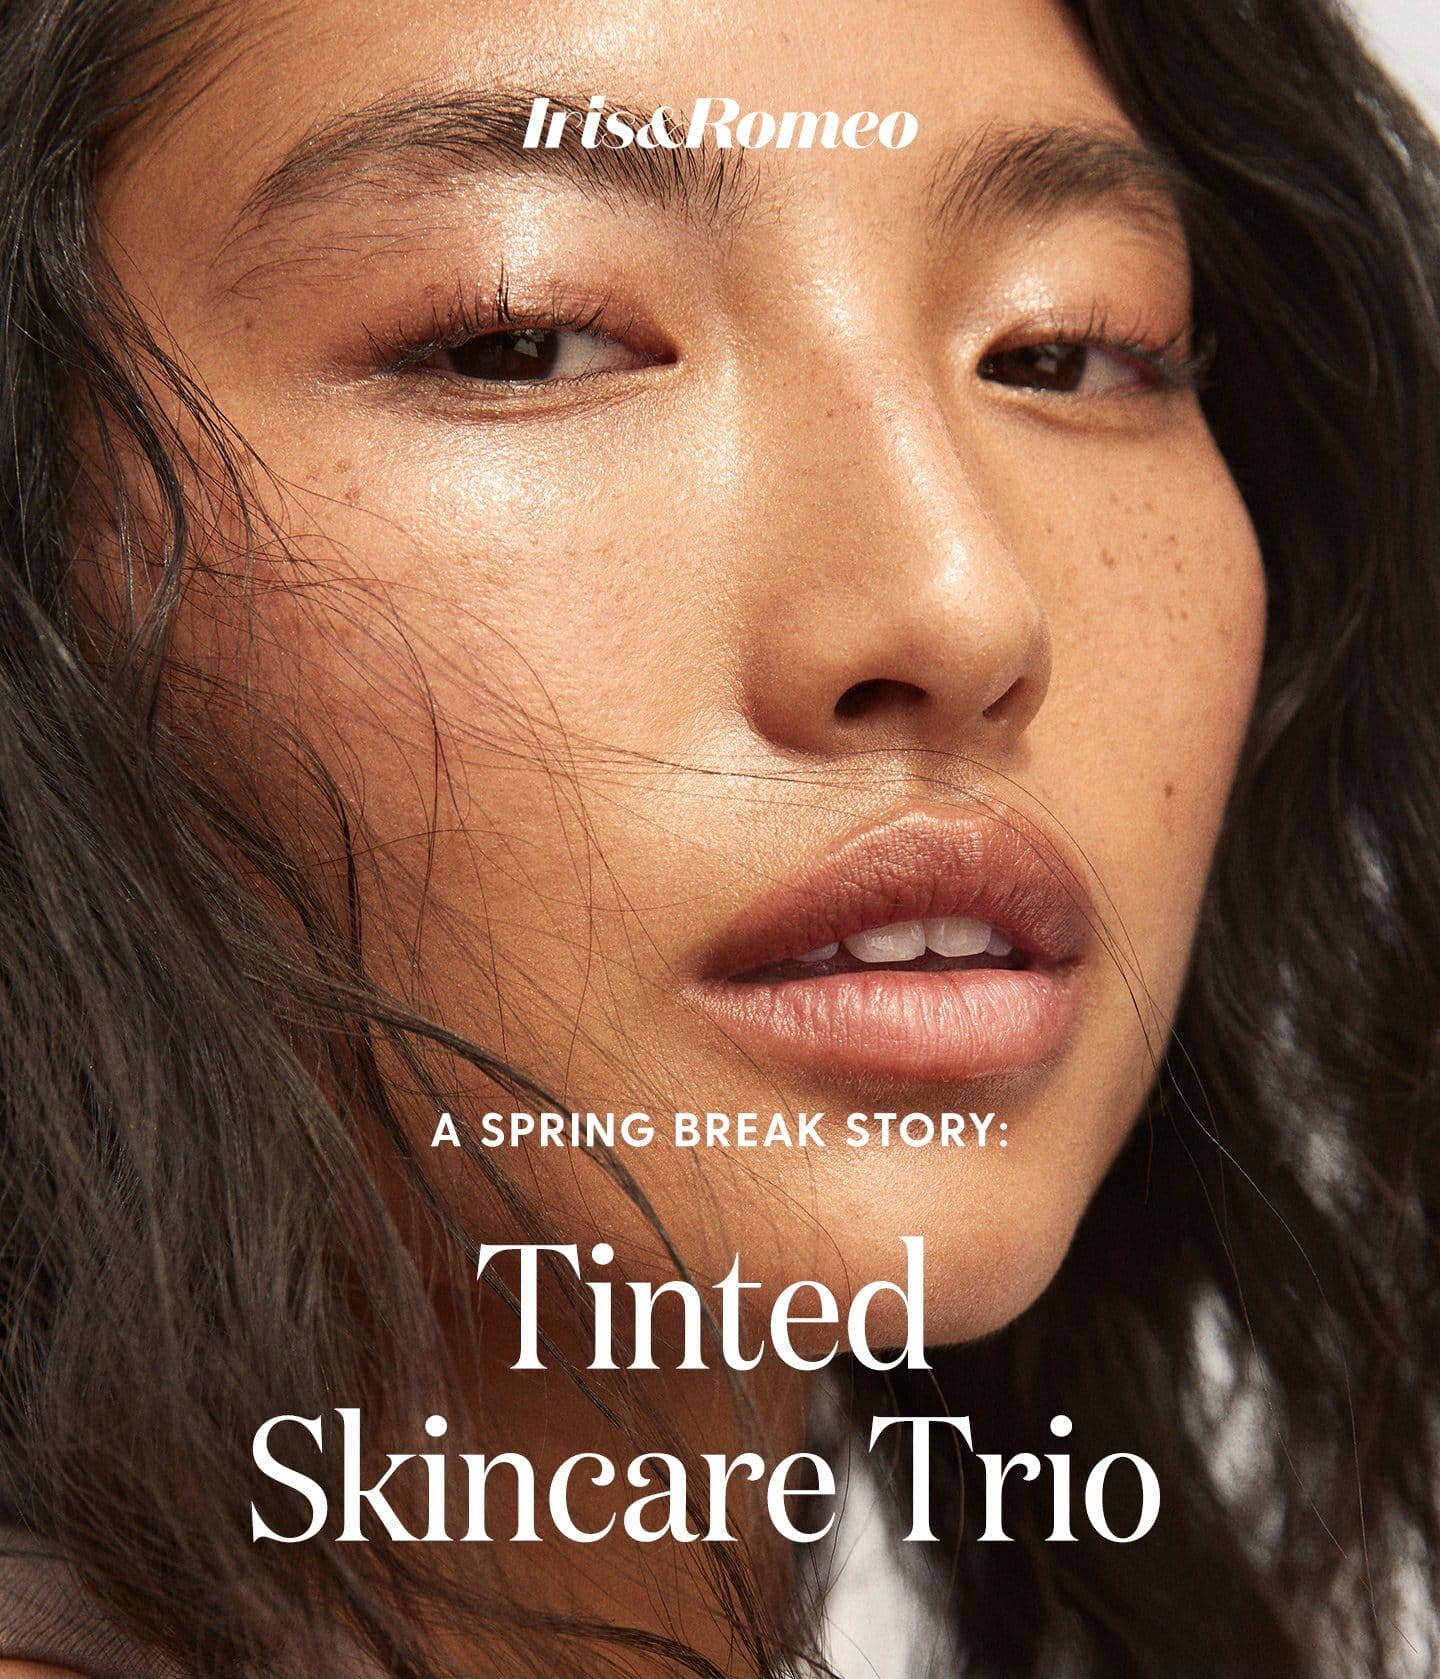 Tinted Skincare Trio